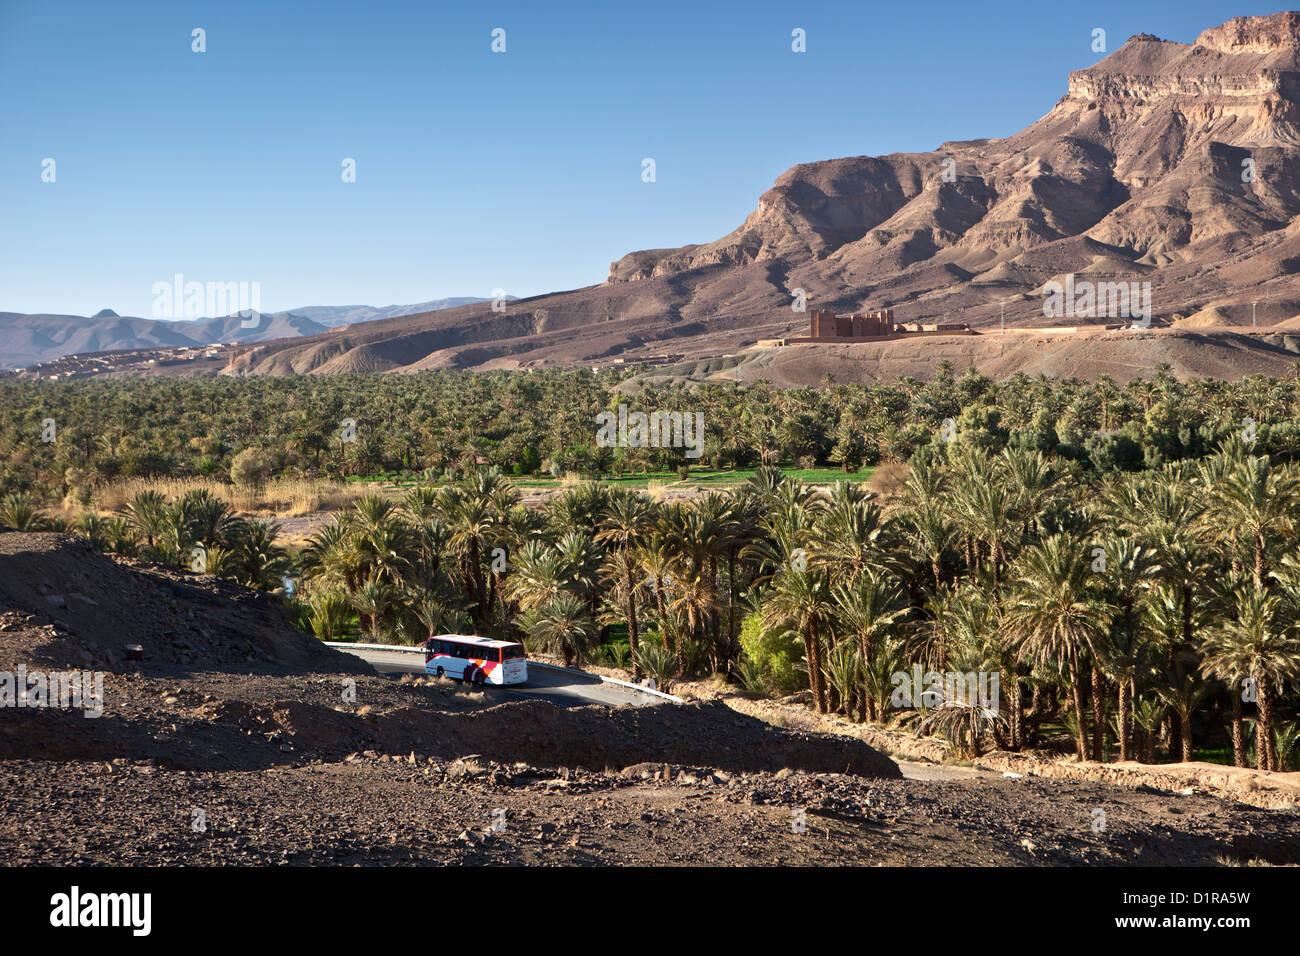 Morocco, near Agdz, Oasis and kasbah. 4x4 car. Stock Photo